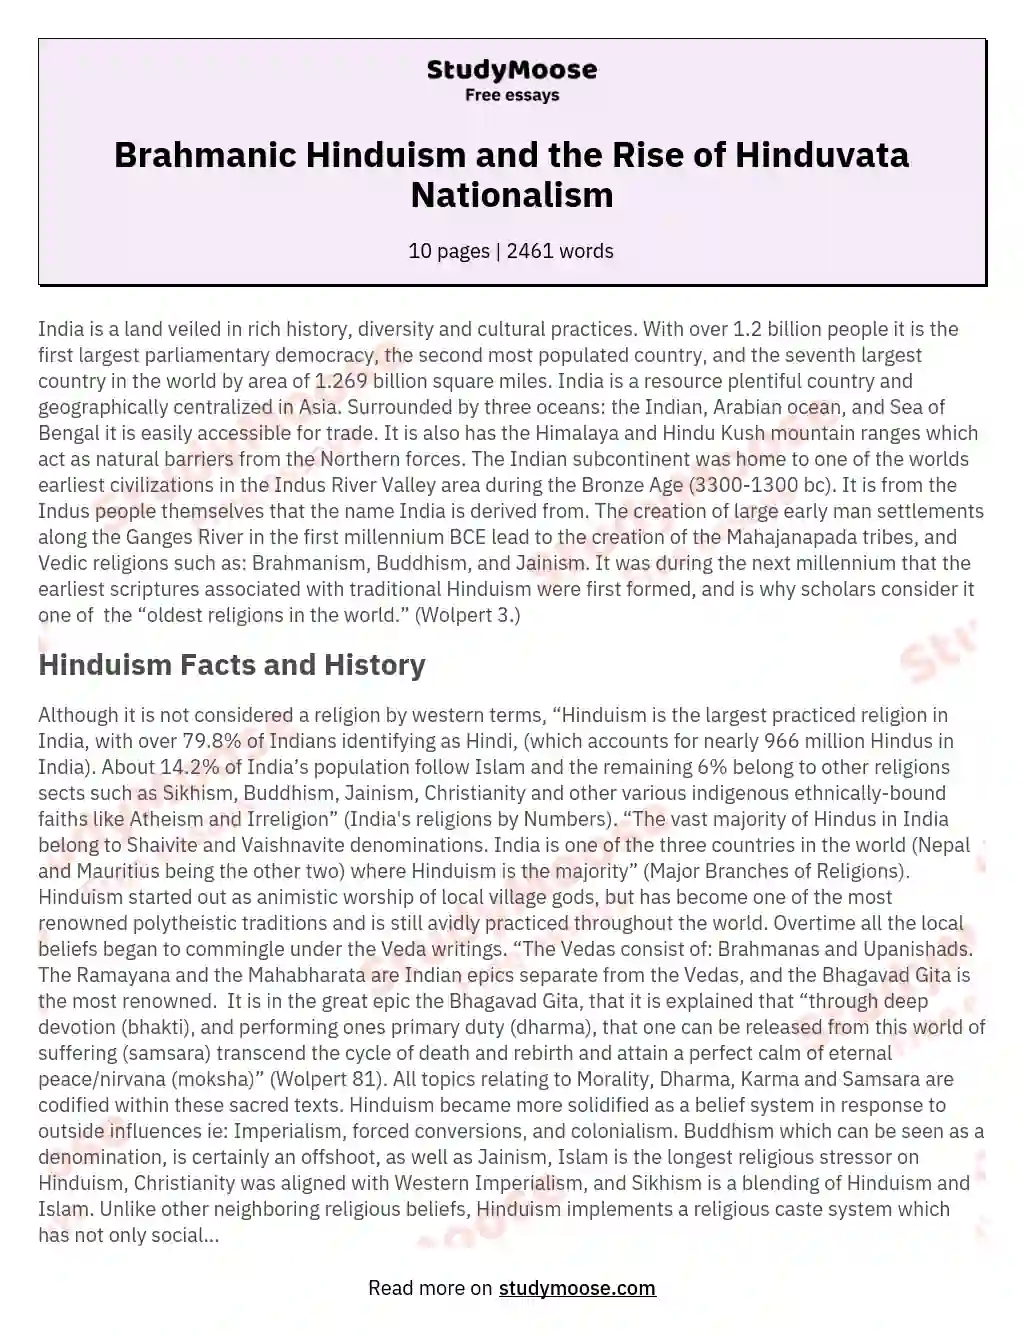 Brahmanic Hinduism and the Rise of Hinduvata Nationalism essay